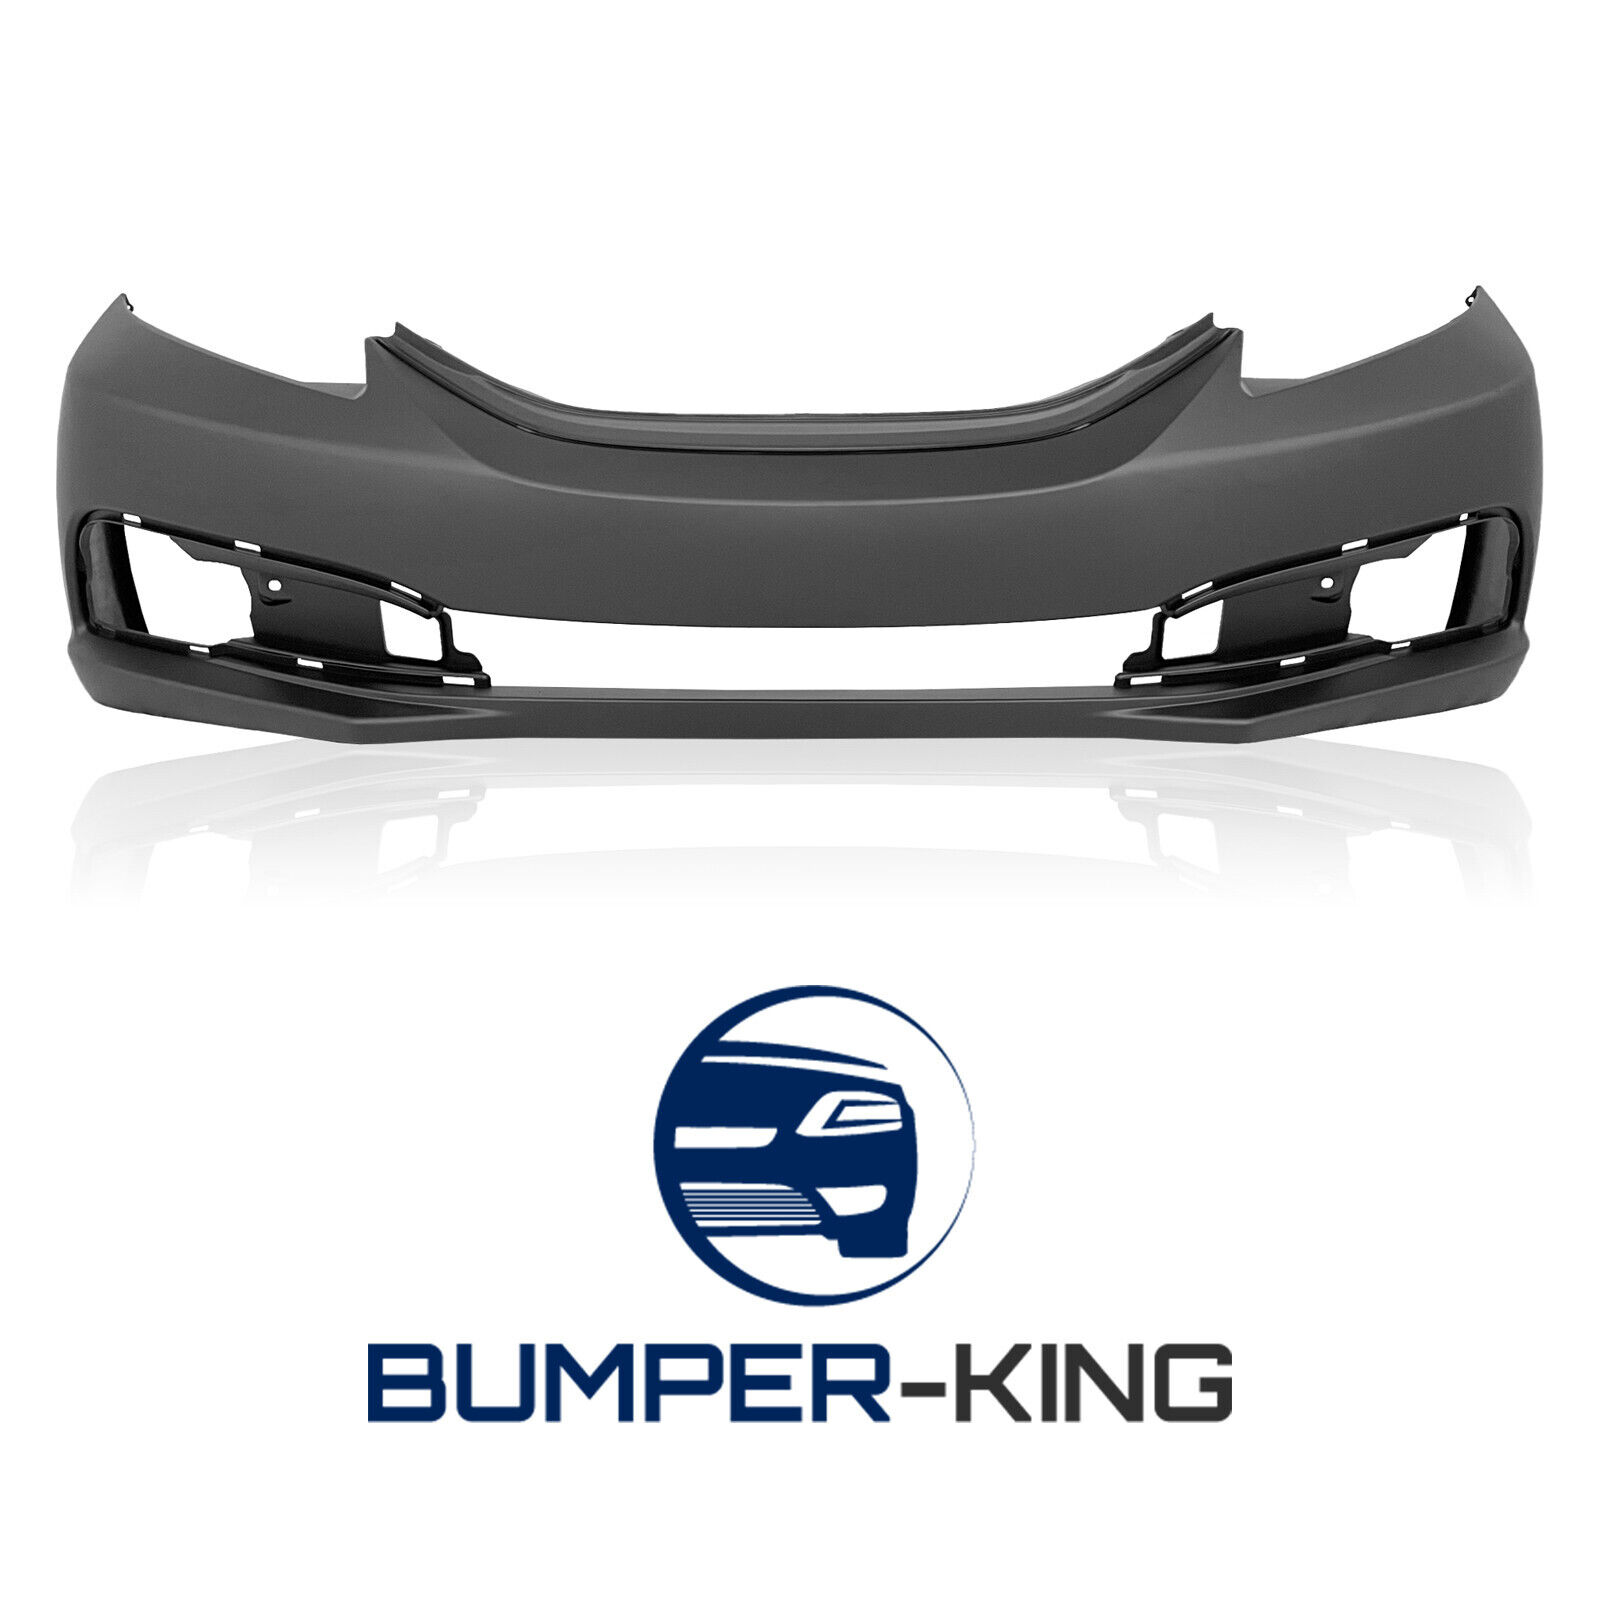 BUMPER-KING Primered Front Bumper Cover for 2013 2014 2015 Honda Civic Sedan